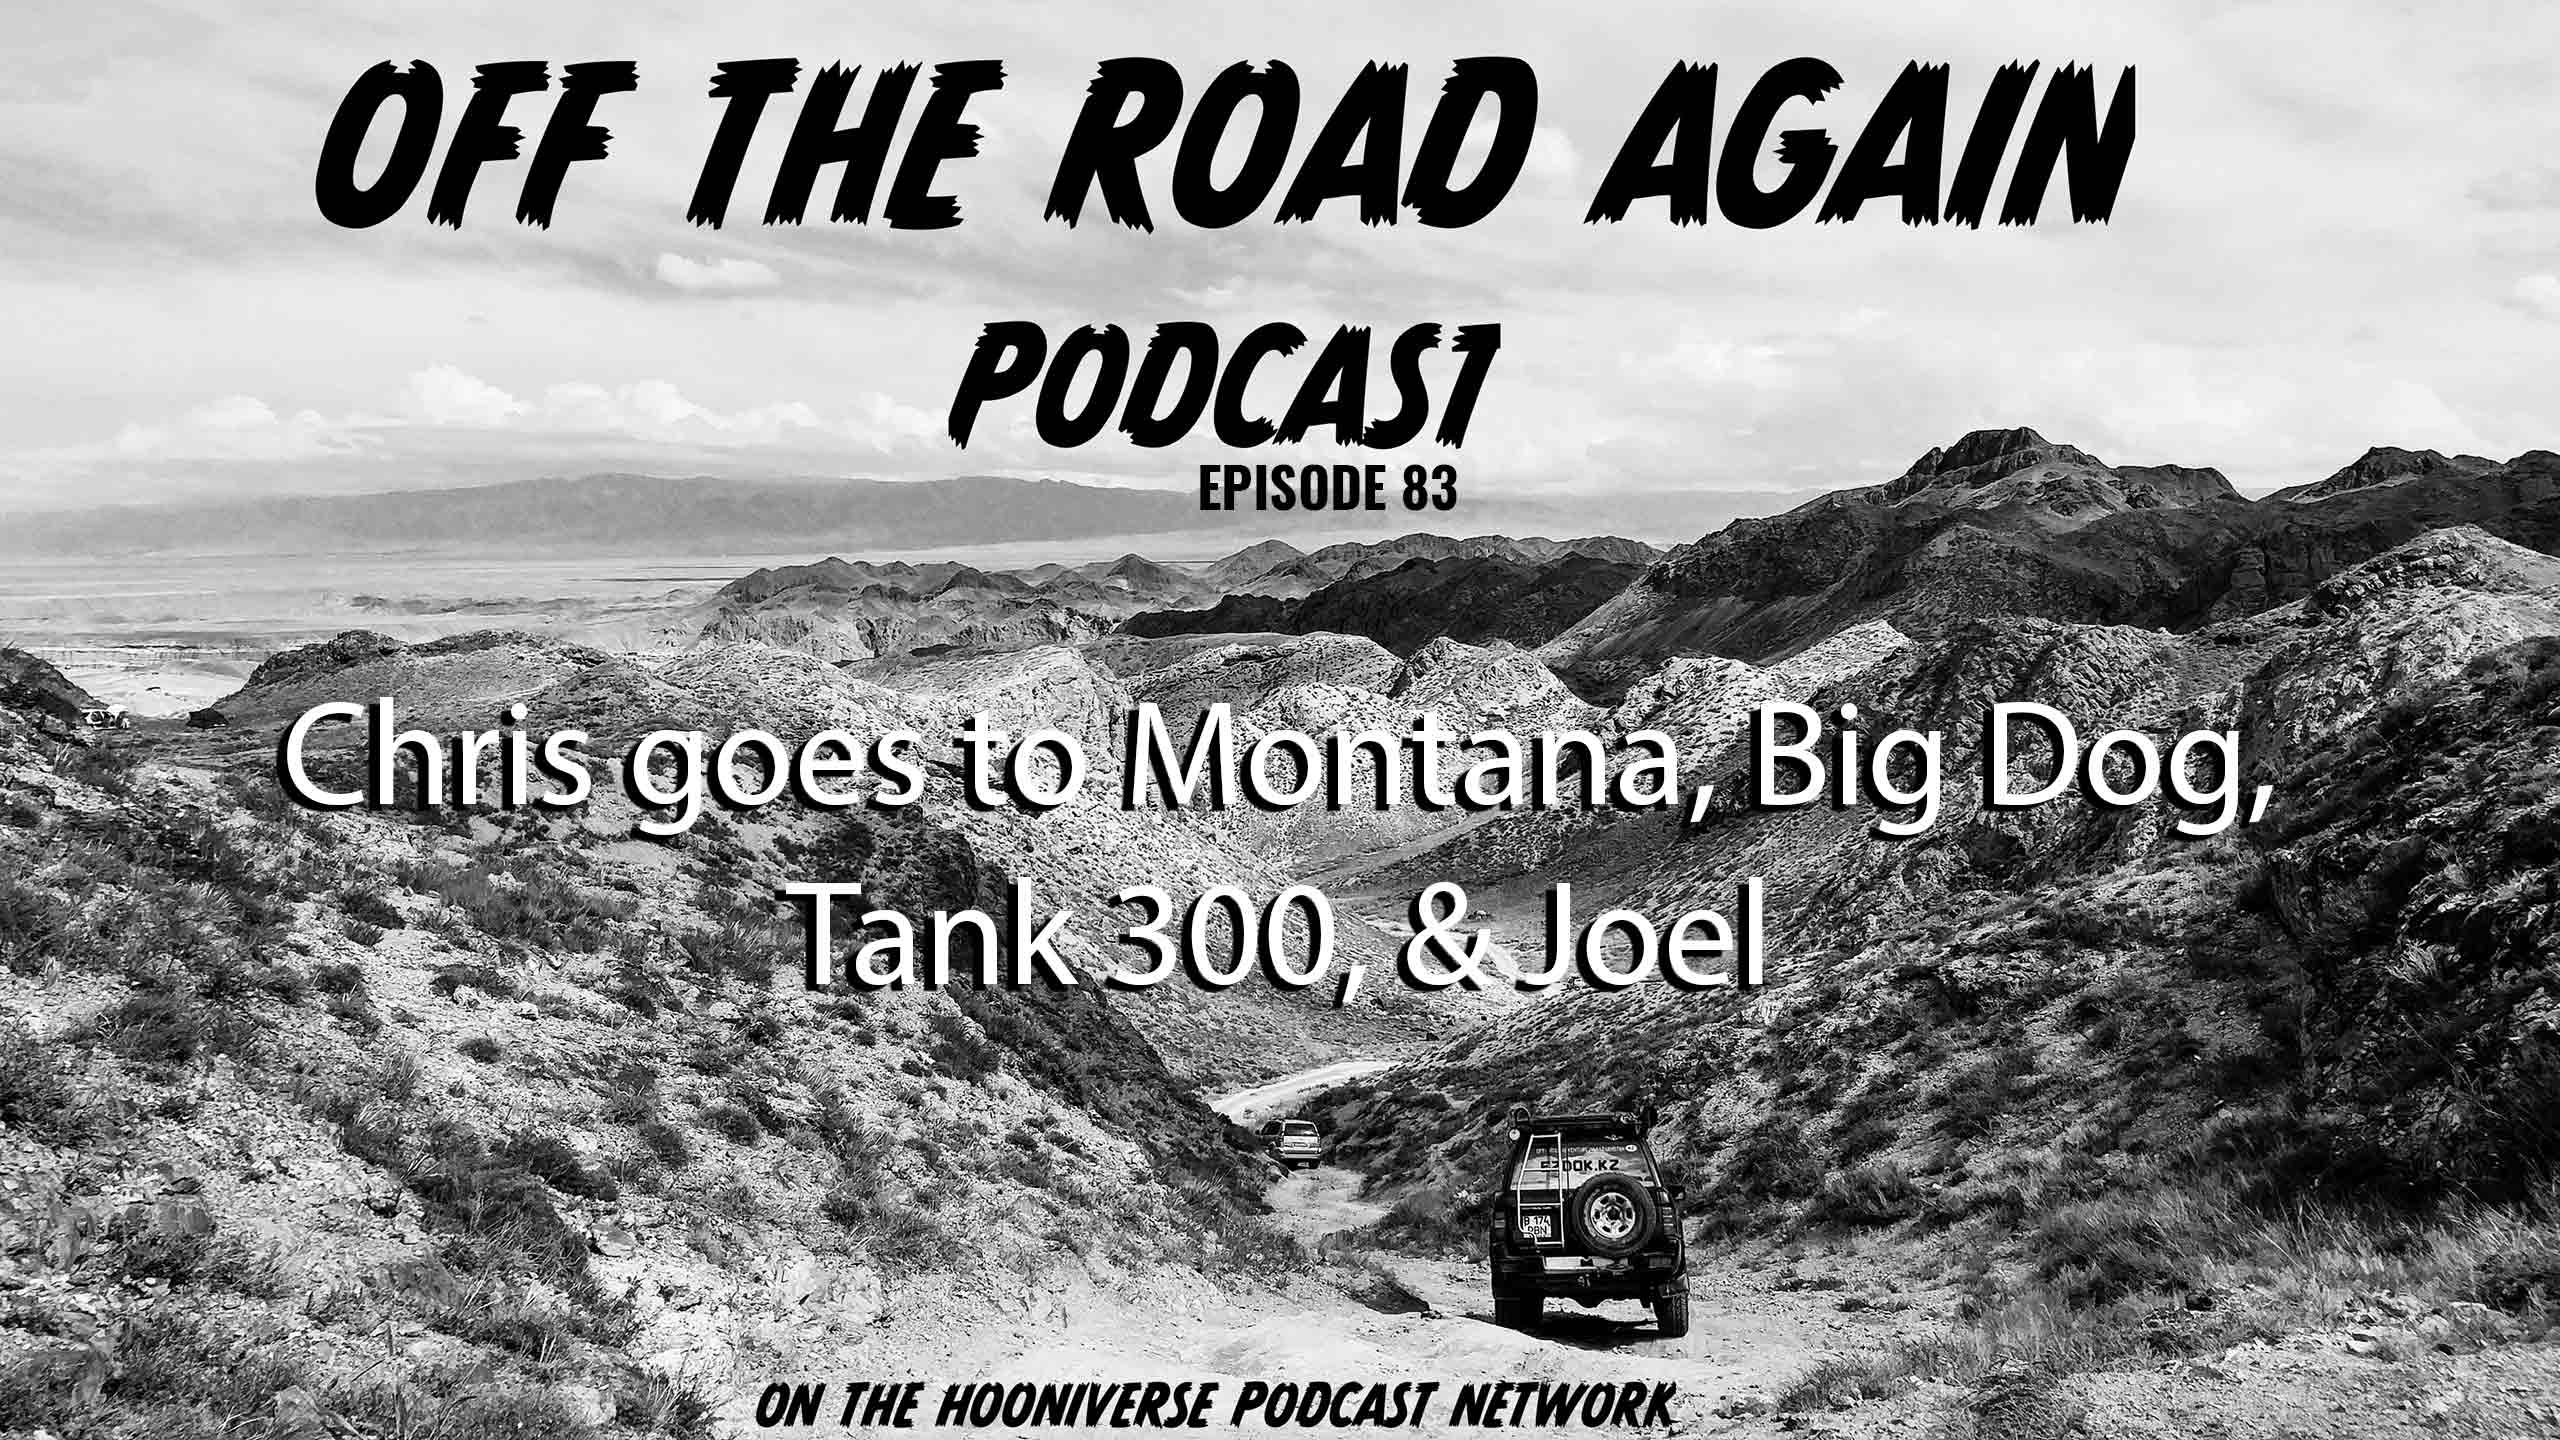 Montana-Big-Dog-Tank-Joel-Strickland-Off-The-Road-Again-Podcast-Episode-83